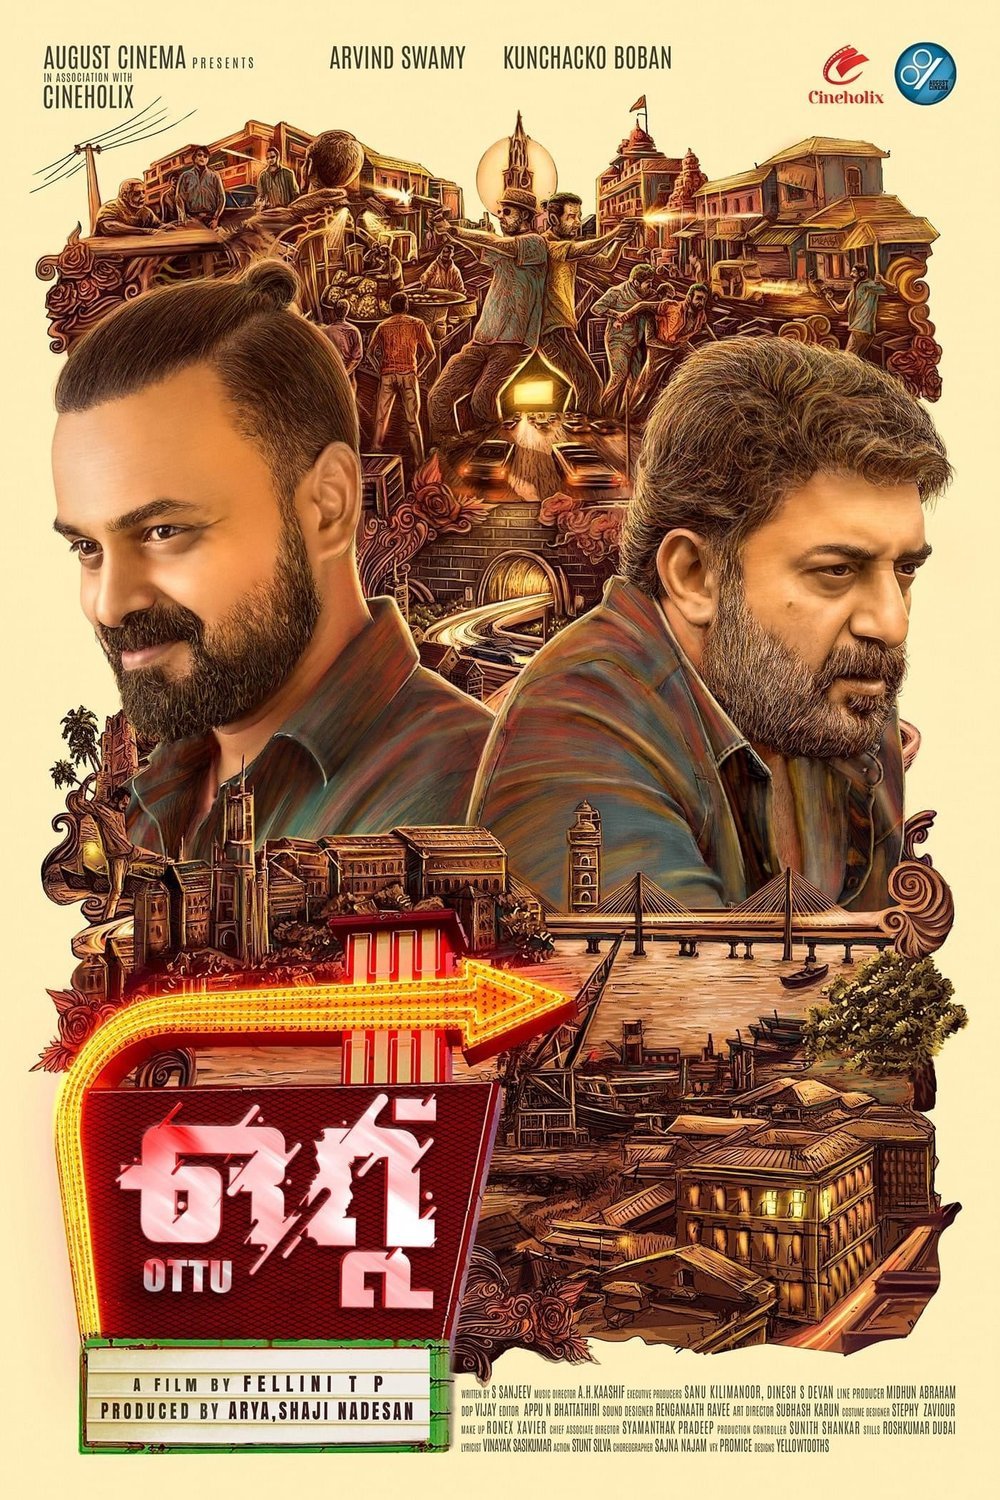 Malayalam poster of the movie Ottu